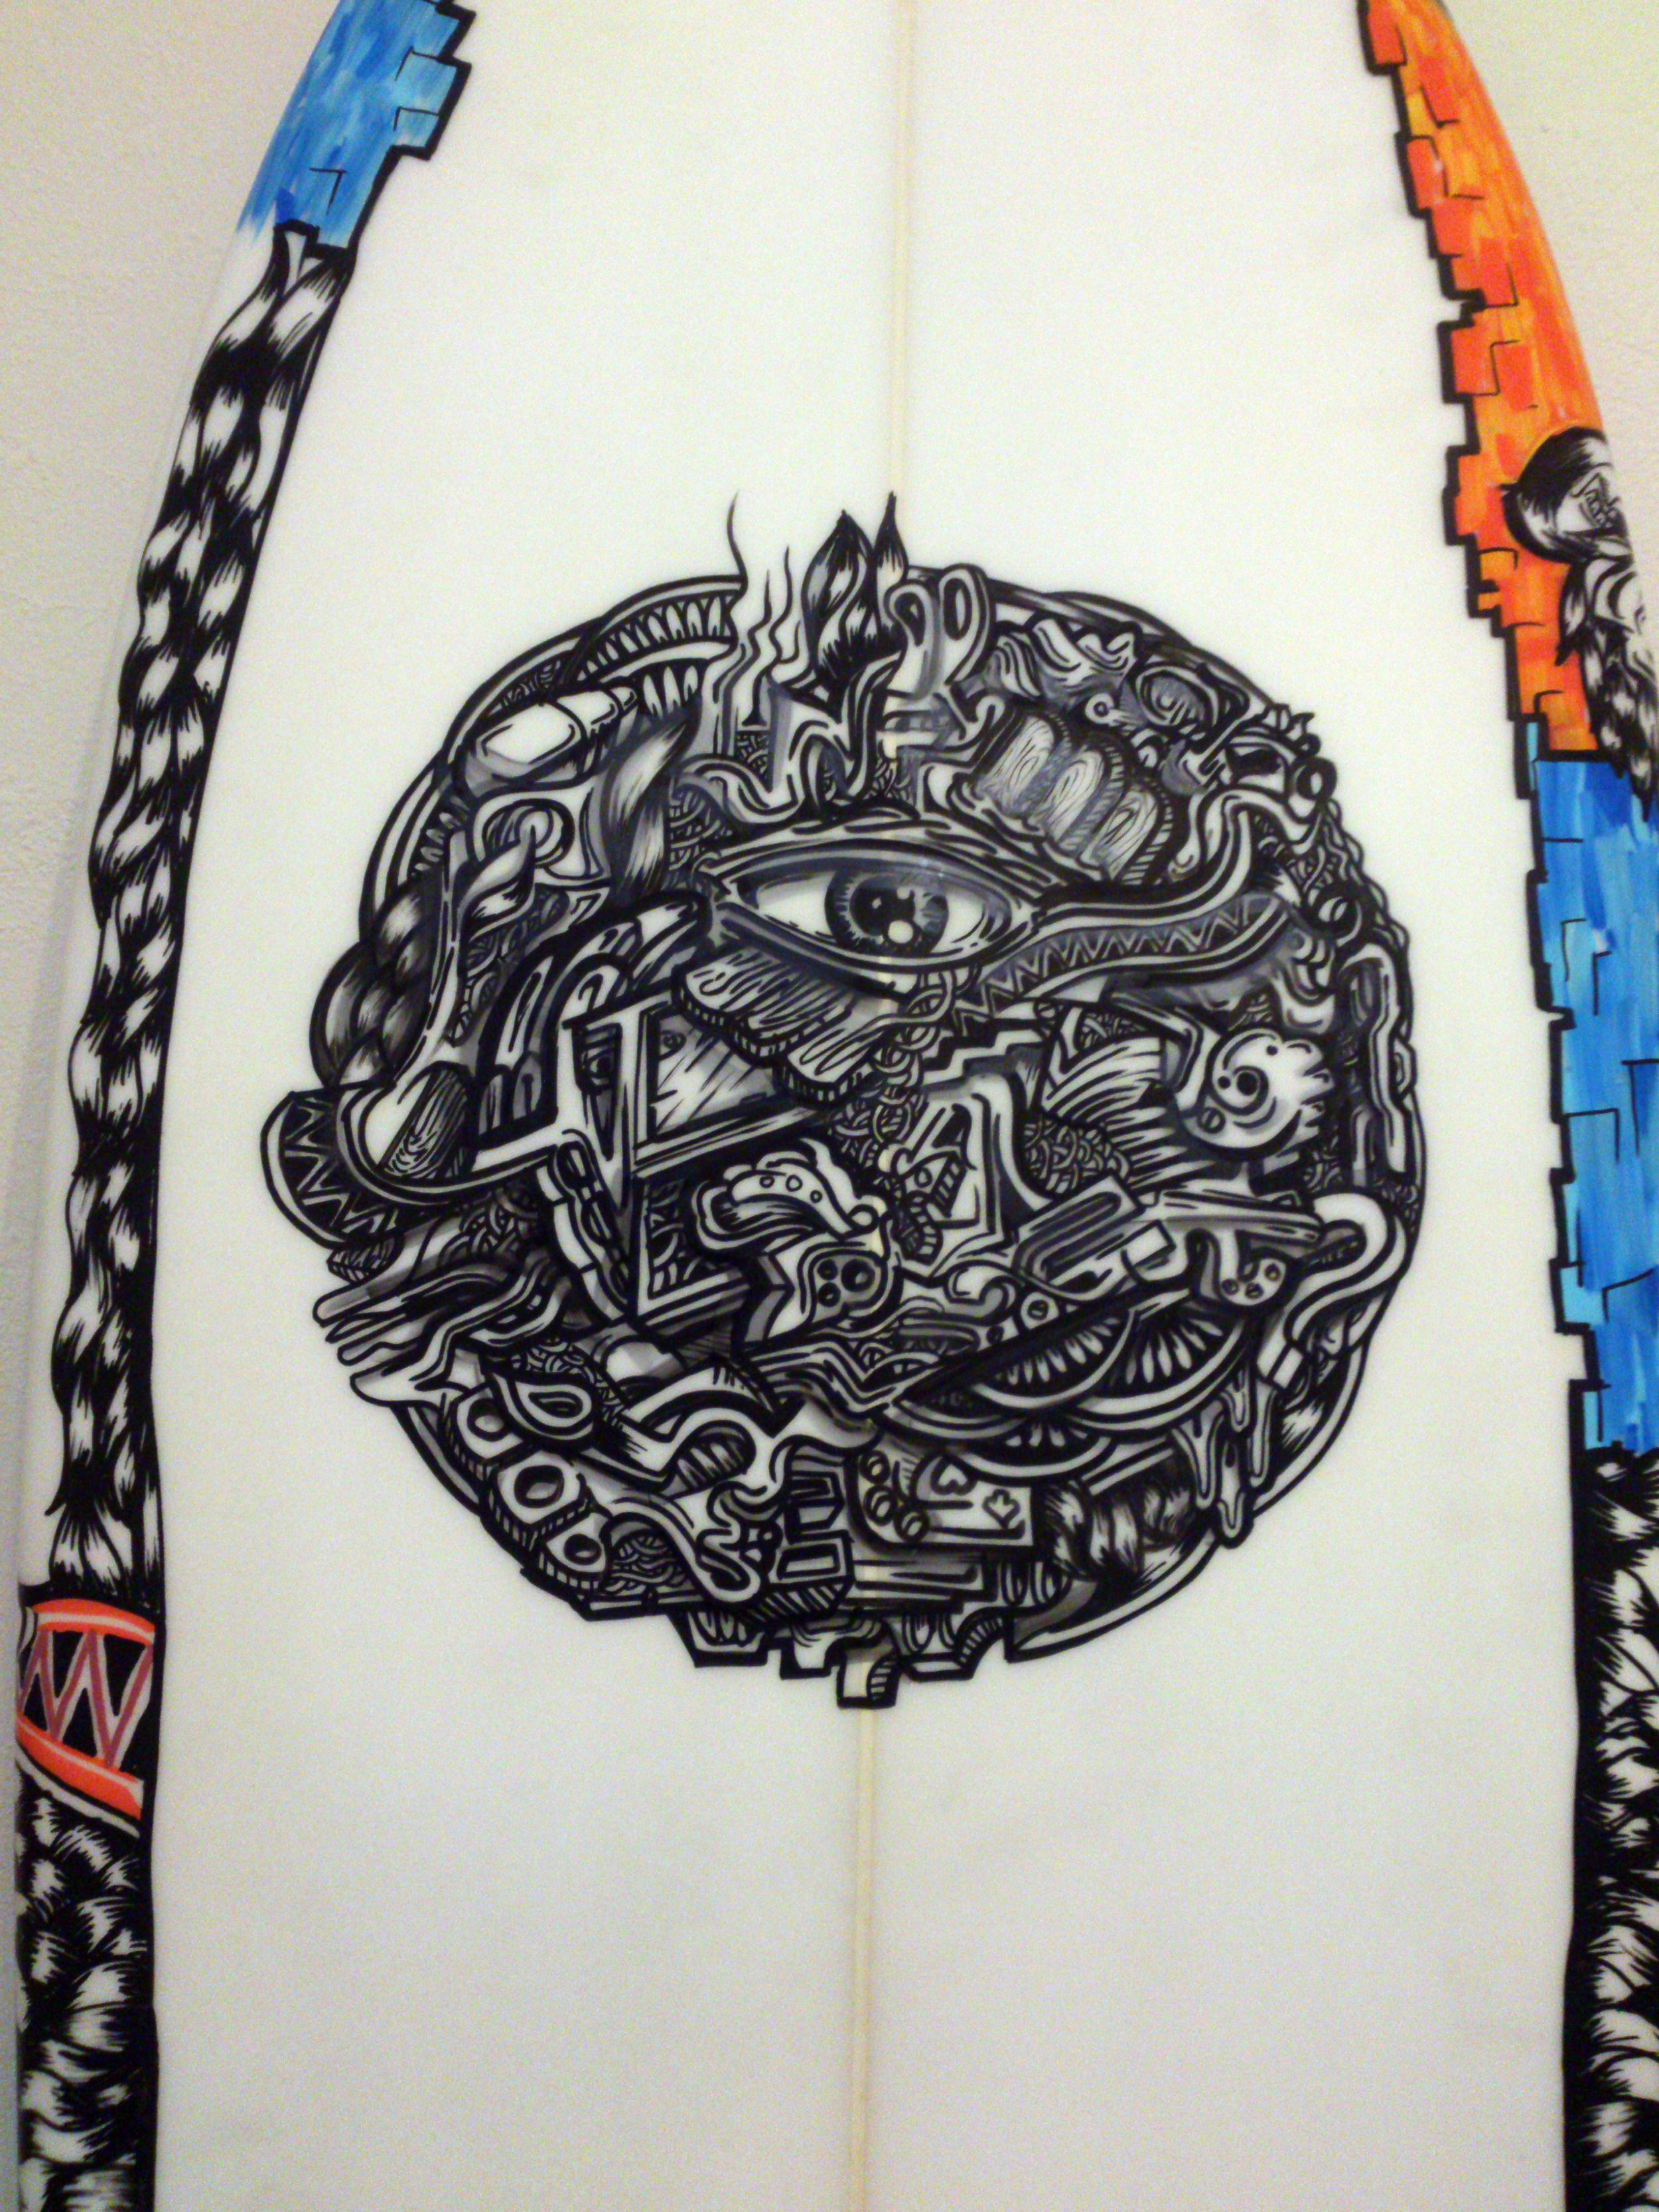 eyeball-detailed-illustration-tattoo-surfboard-custom-art-sam-shennan-ud3-handmade-handpainted.jpg